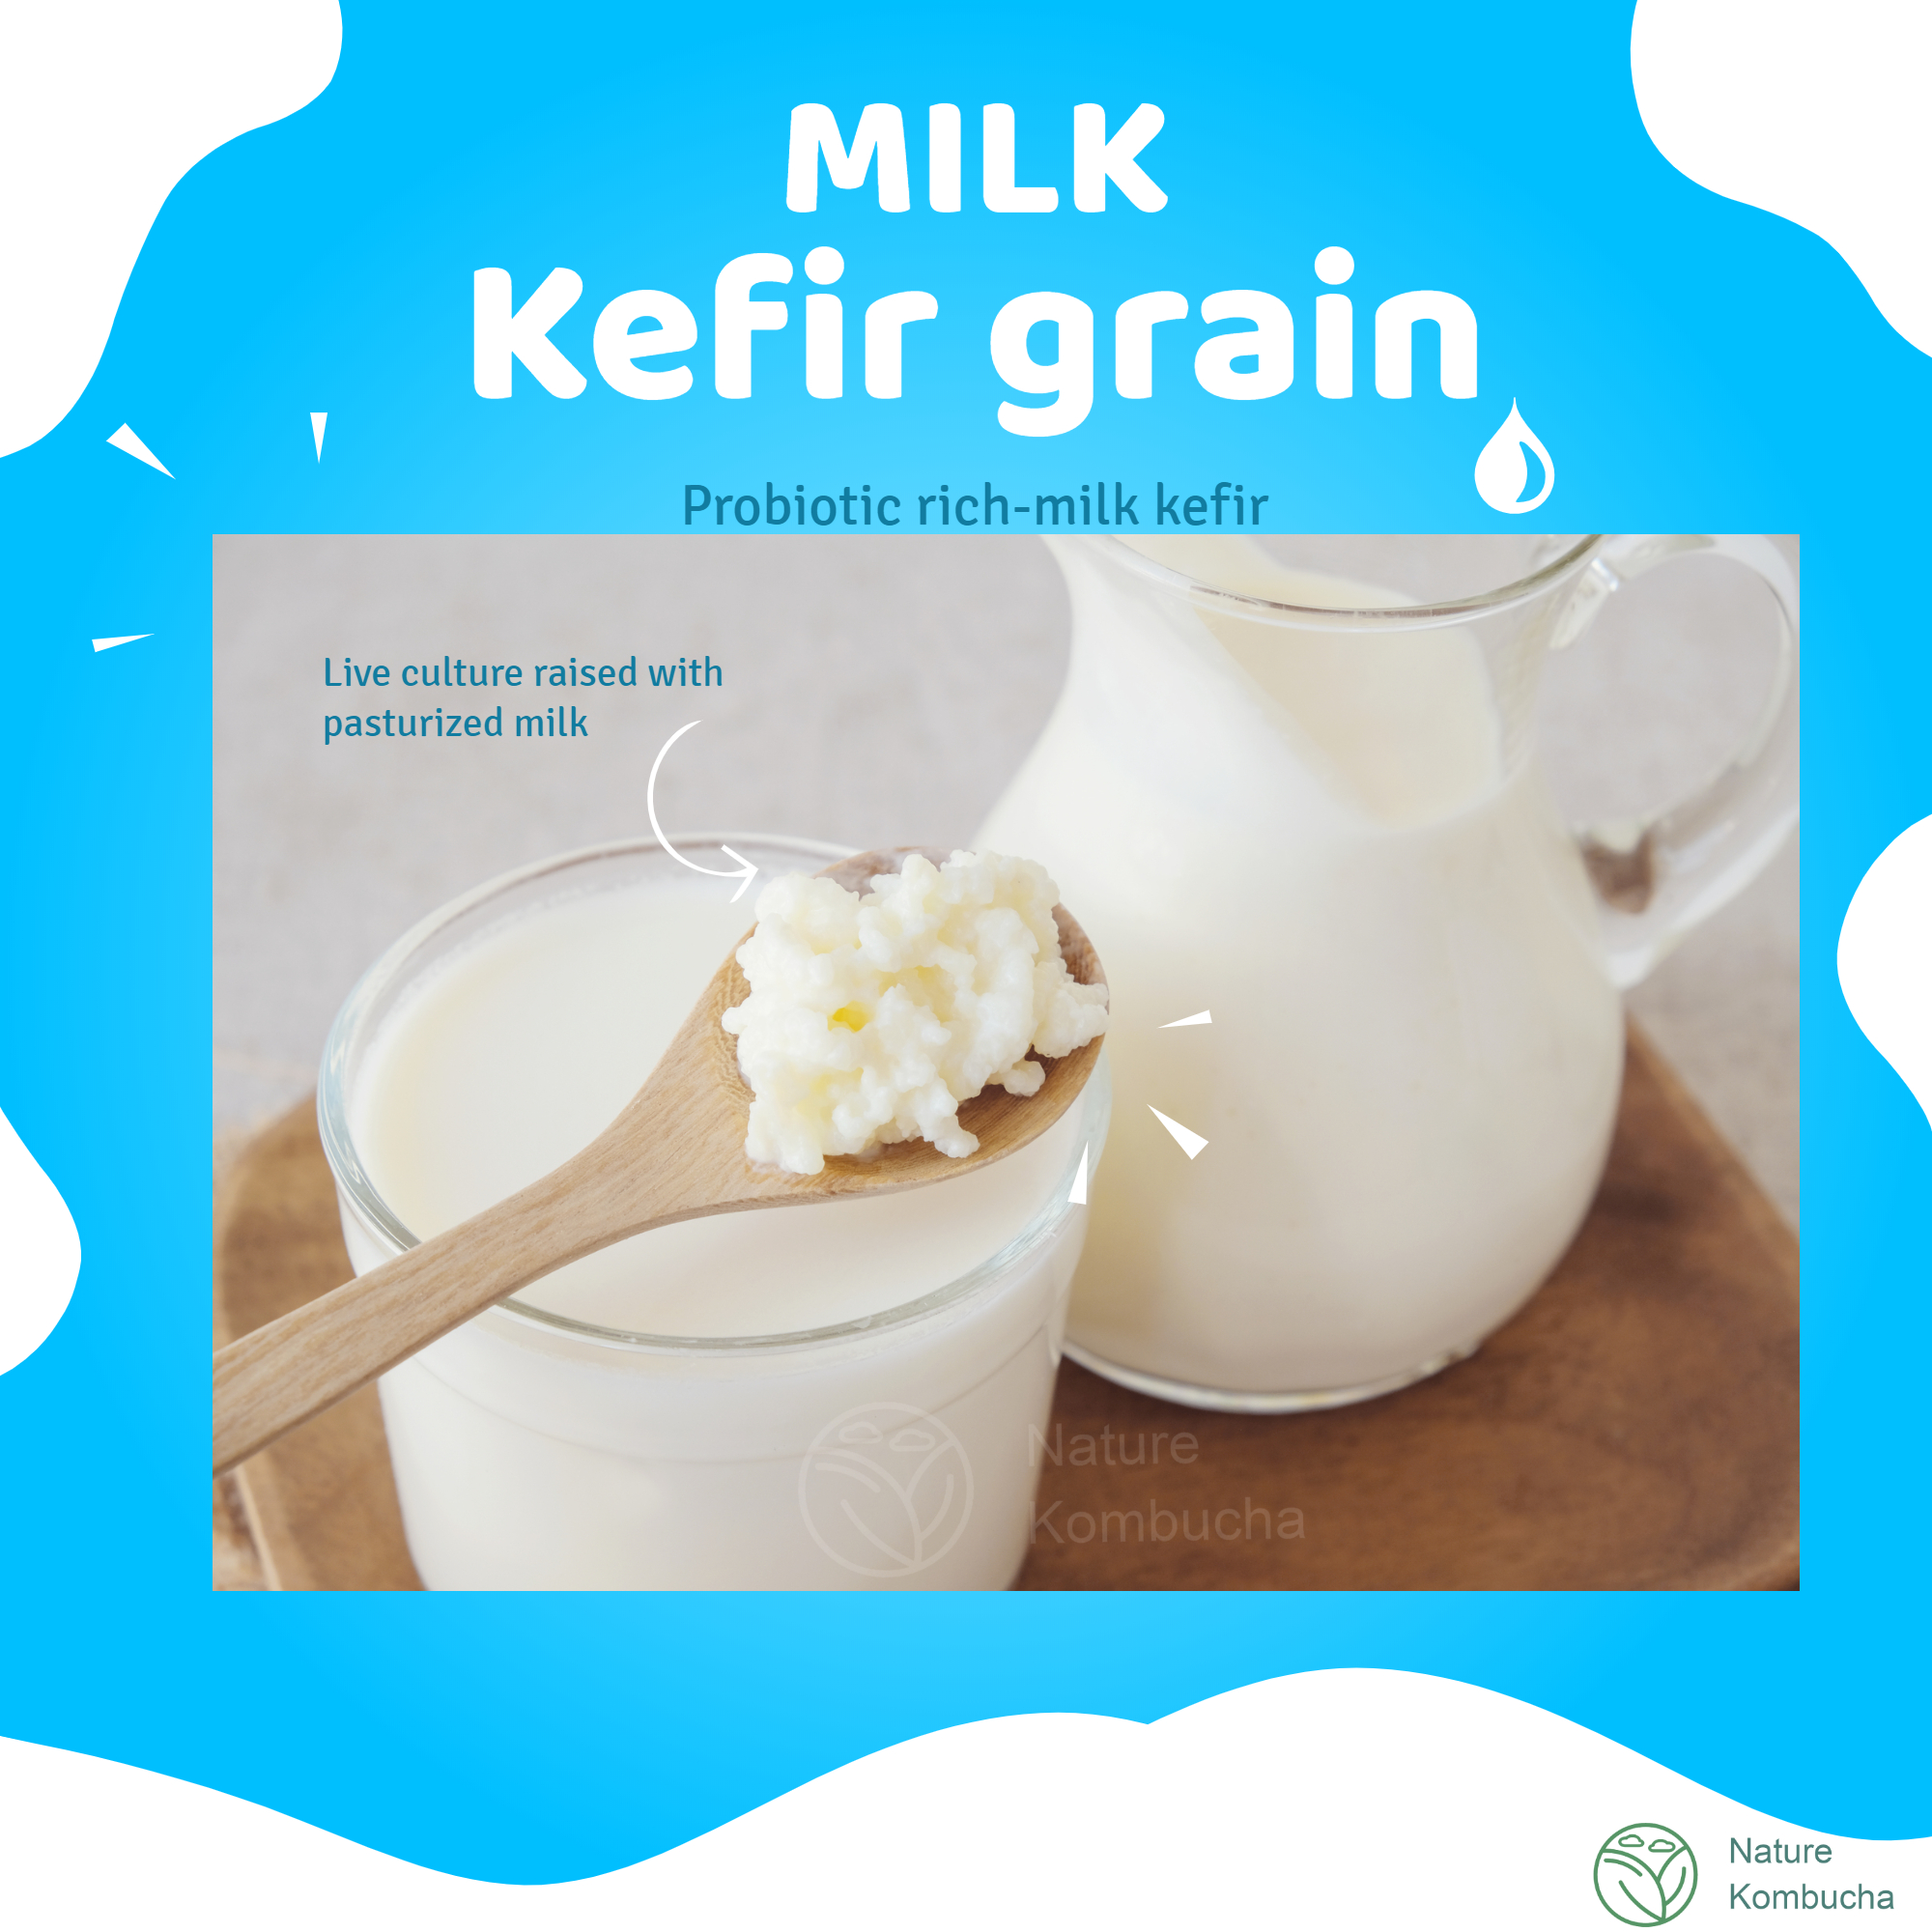 Milk kefir grain 10g raised with fresh pasteurized milk | เกรนคีเฟอร์นม 10g เลี้ยงด้วยนมฟาสเจอร์ไรส์